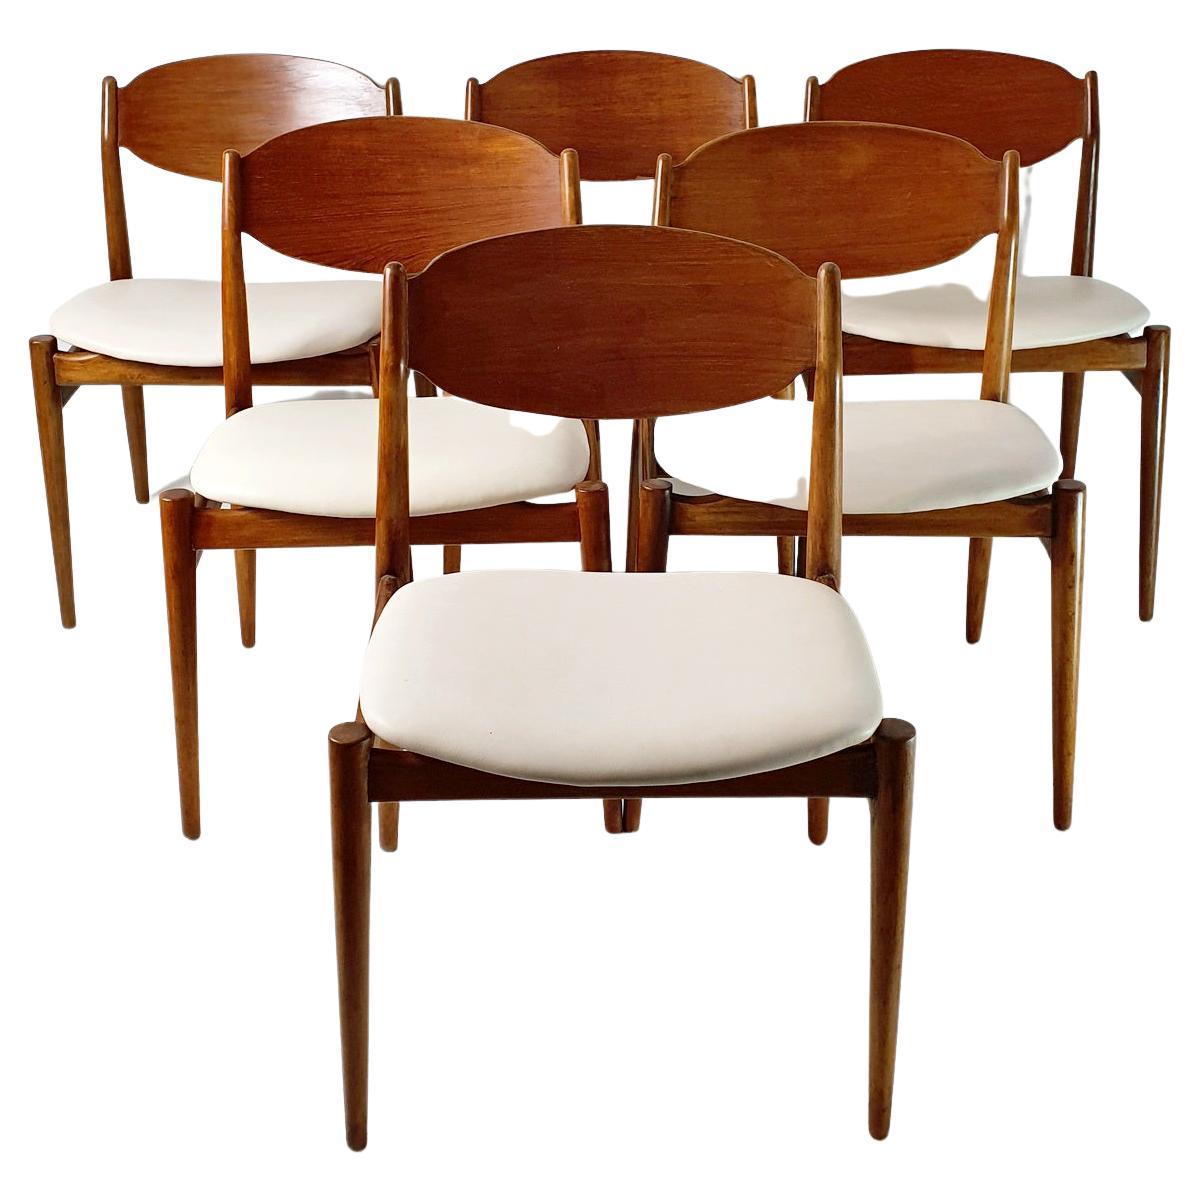 Midcentury Chairs in Teak and Leather by Leonardo Fiori for ISA Bergamo Italy